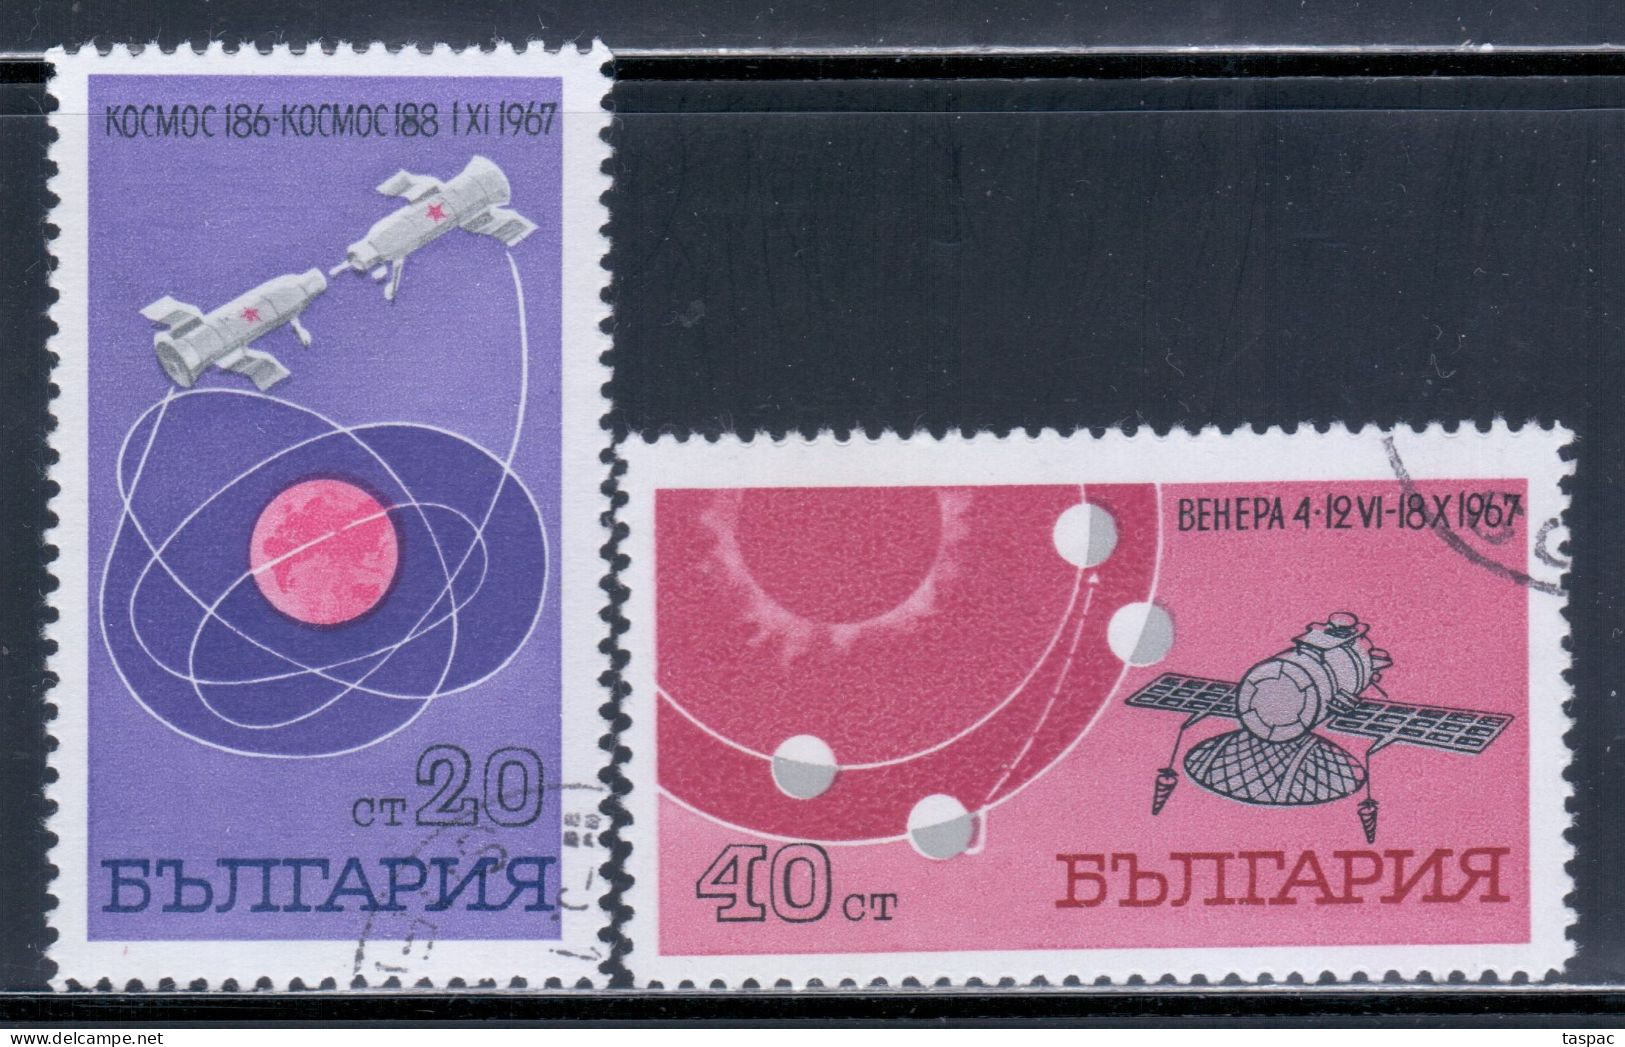 Bulgaria 1967 Mi# 1777-1778 Used - Russian Spaceships Cosmos 186 And Cosmos 188 / Venus 4 / Space - Europe